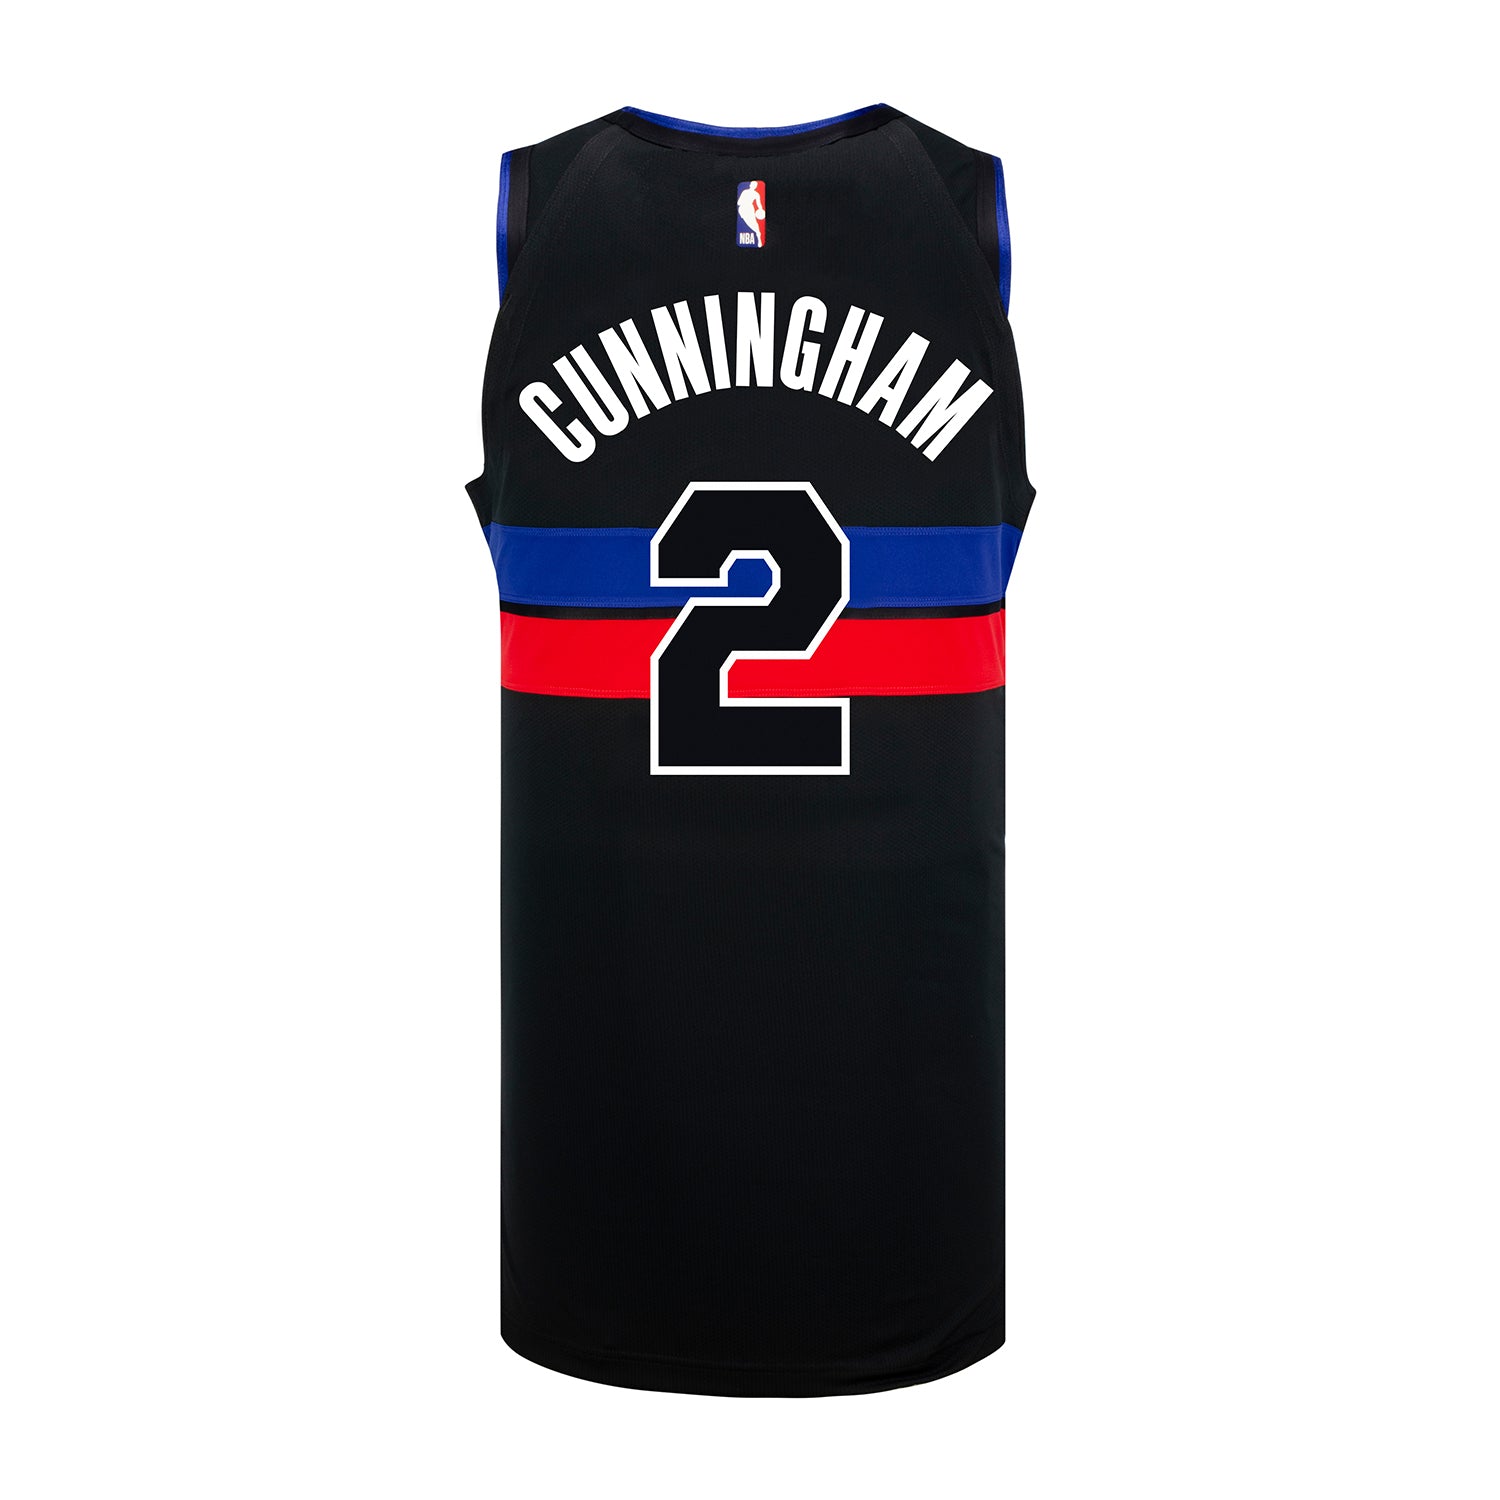 Fanatics Authentic Cade Cunningham Detroit Pistons Autographed Jordan Brand Gray Statement Swingman Jersey with 2021 #1 Draft Pick Inscription